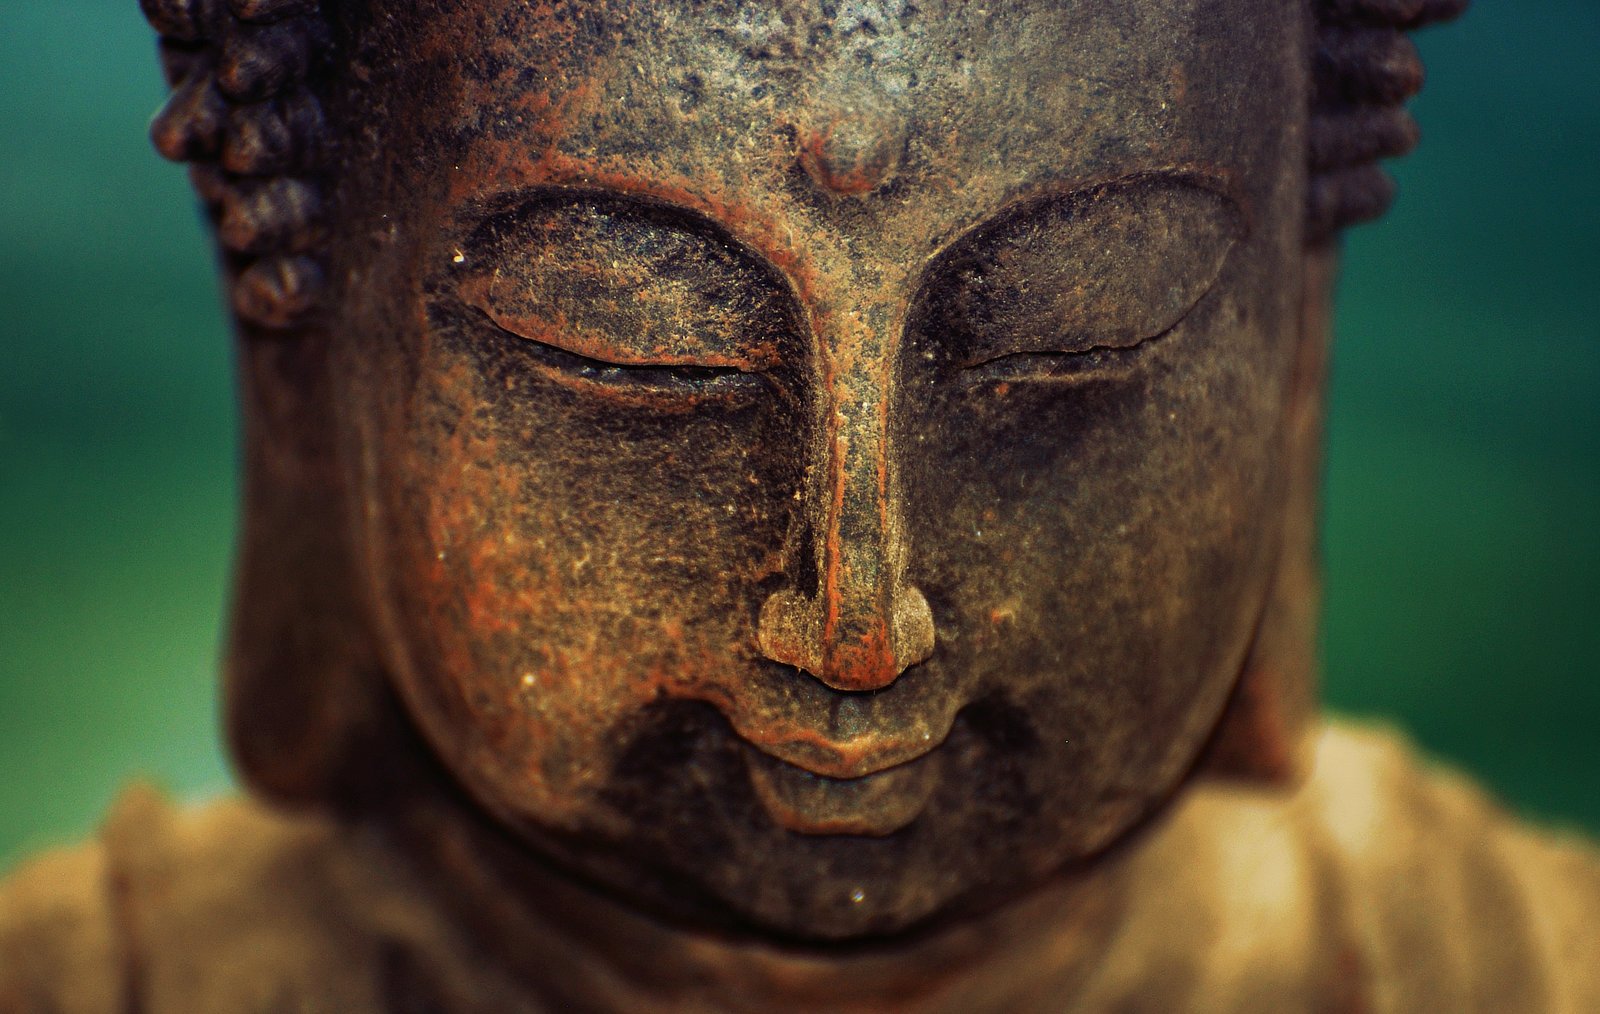 Detail of bronze Buddha face